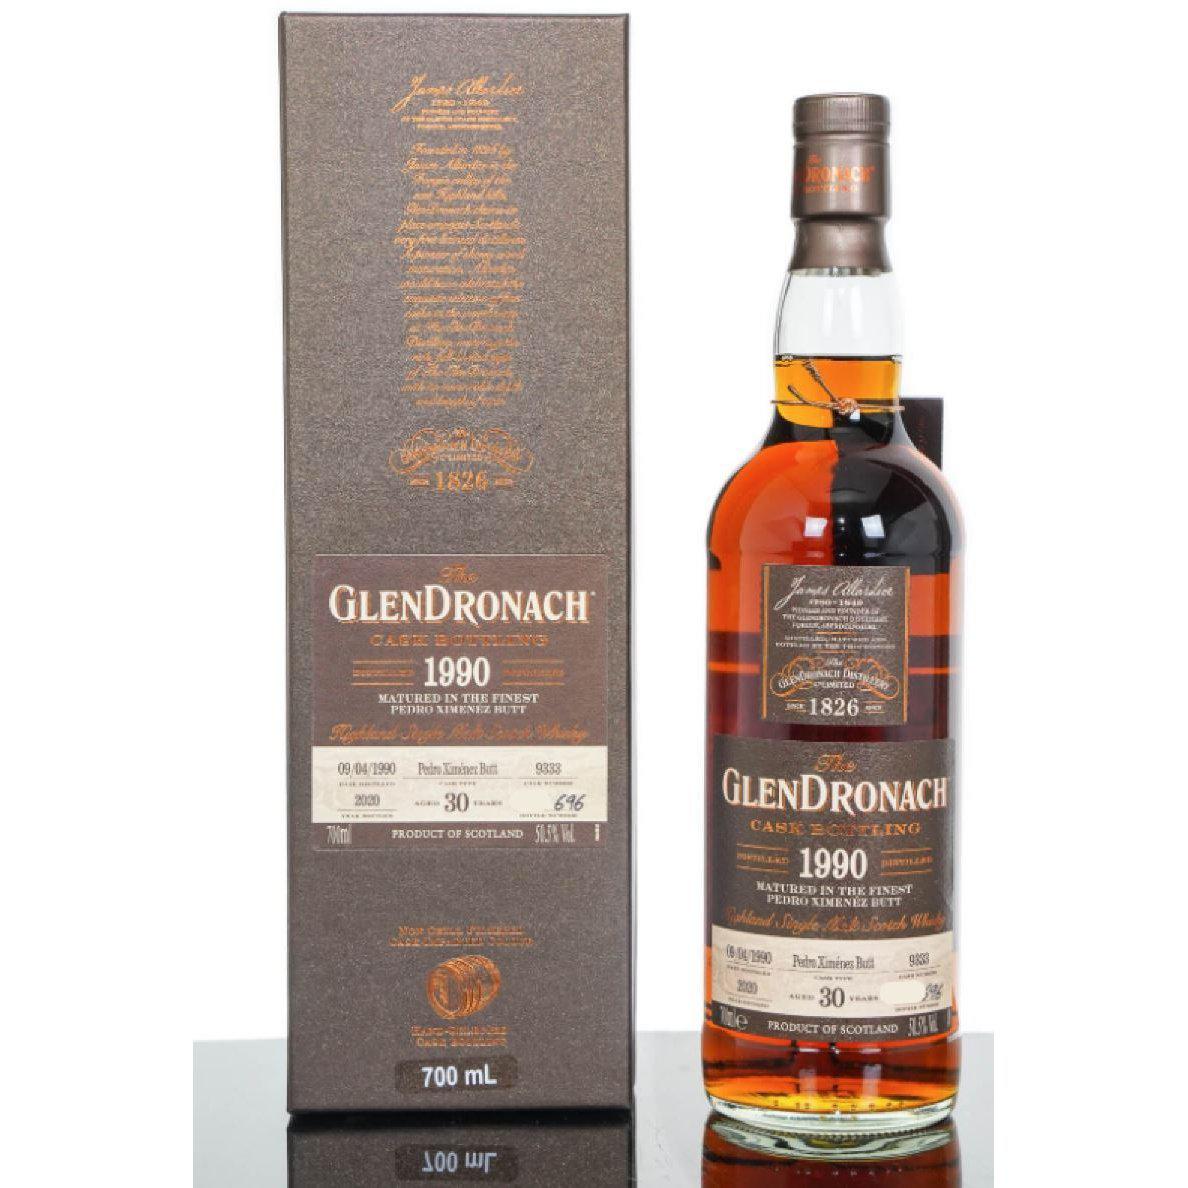 1990 Glendronach Single Cask No.9333 Pedro Ximenez Sherry Butt Cask Strength 30 Year Old Single Malt Scotch Whisky 700ml